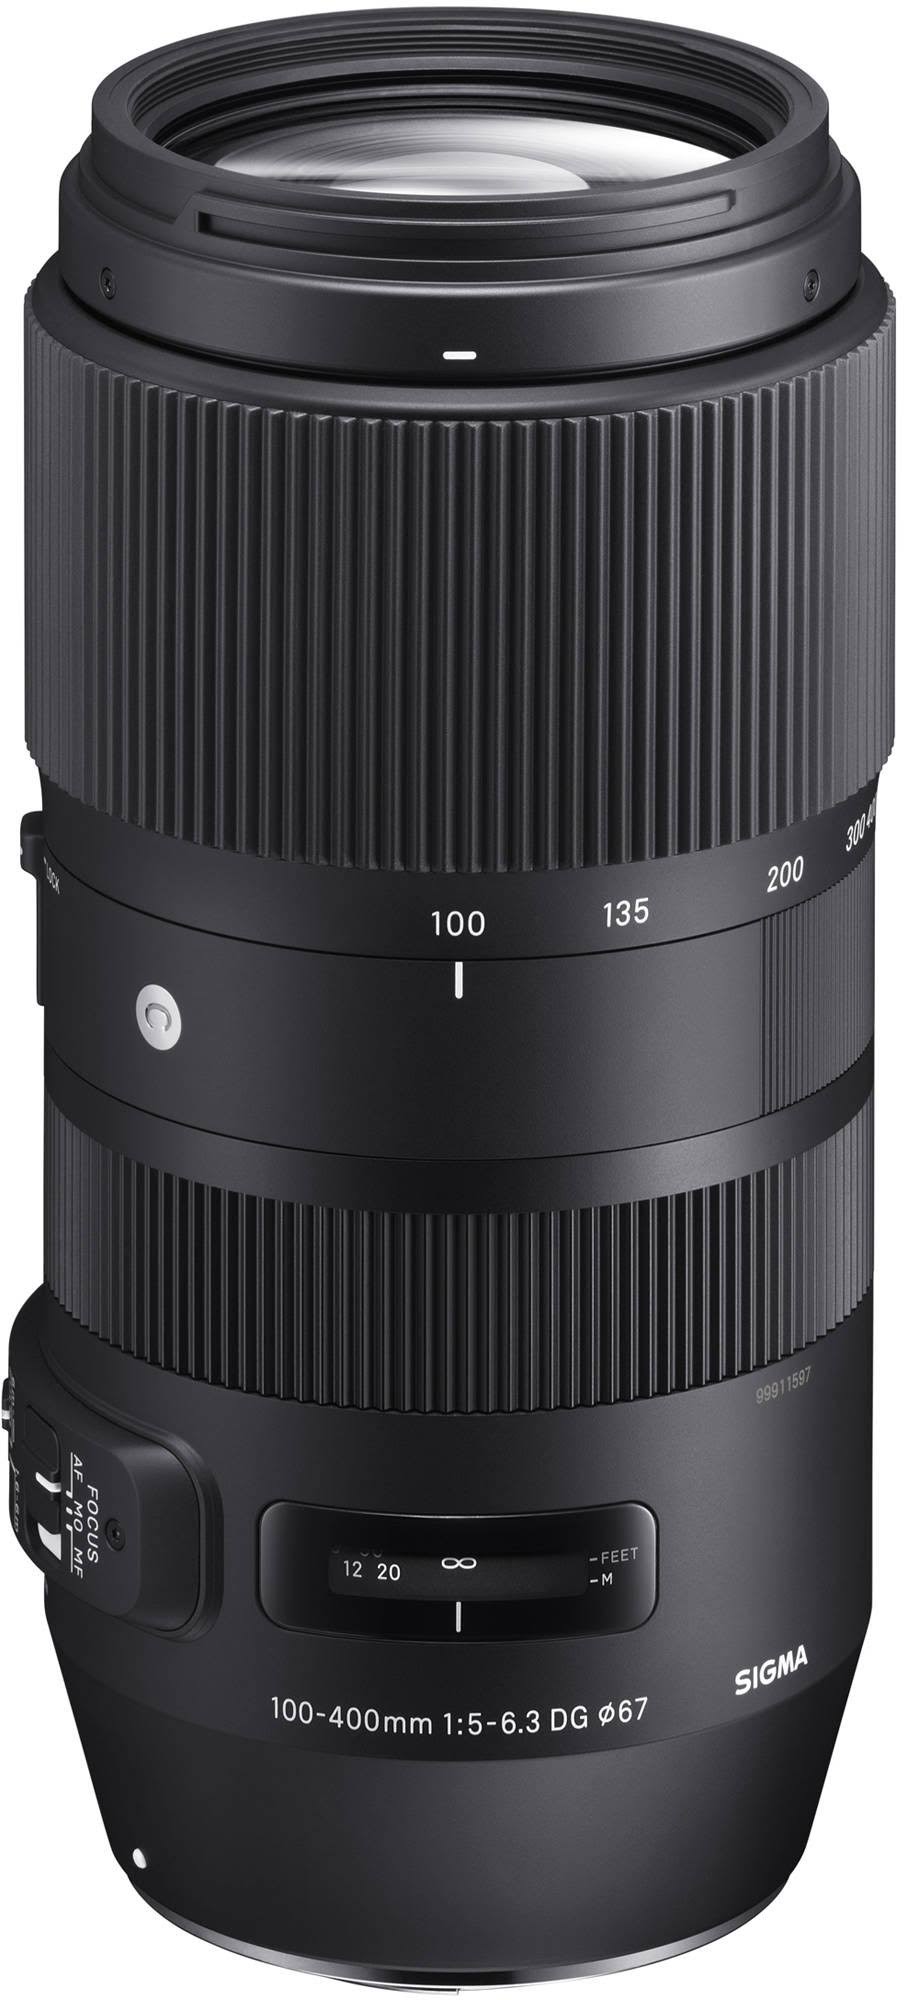 SIGMA 100-400mm f/5-6.3 DG OS HSM Contemporary Lens for...